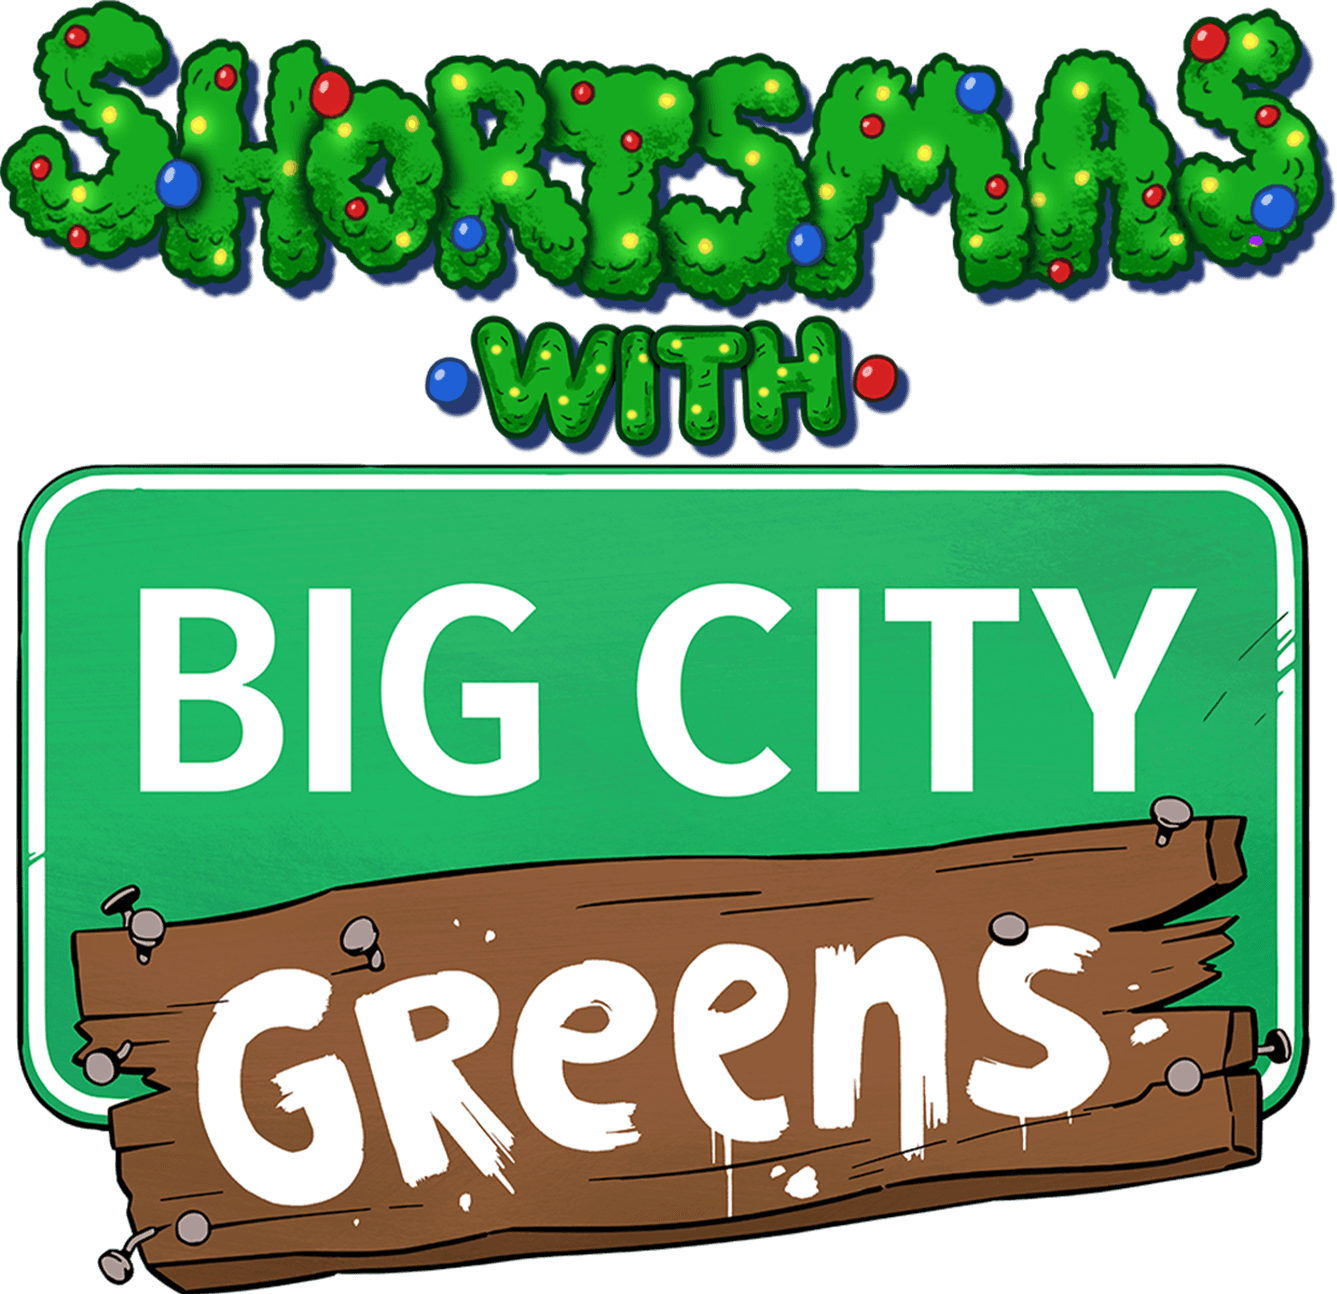 Shortsmas with Big City Greens logo